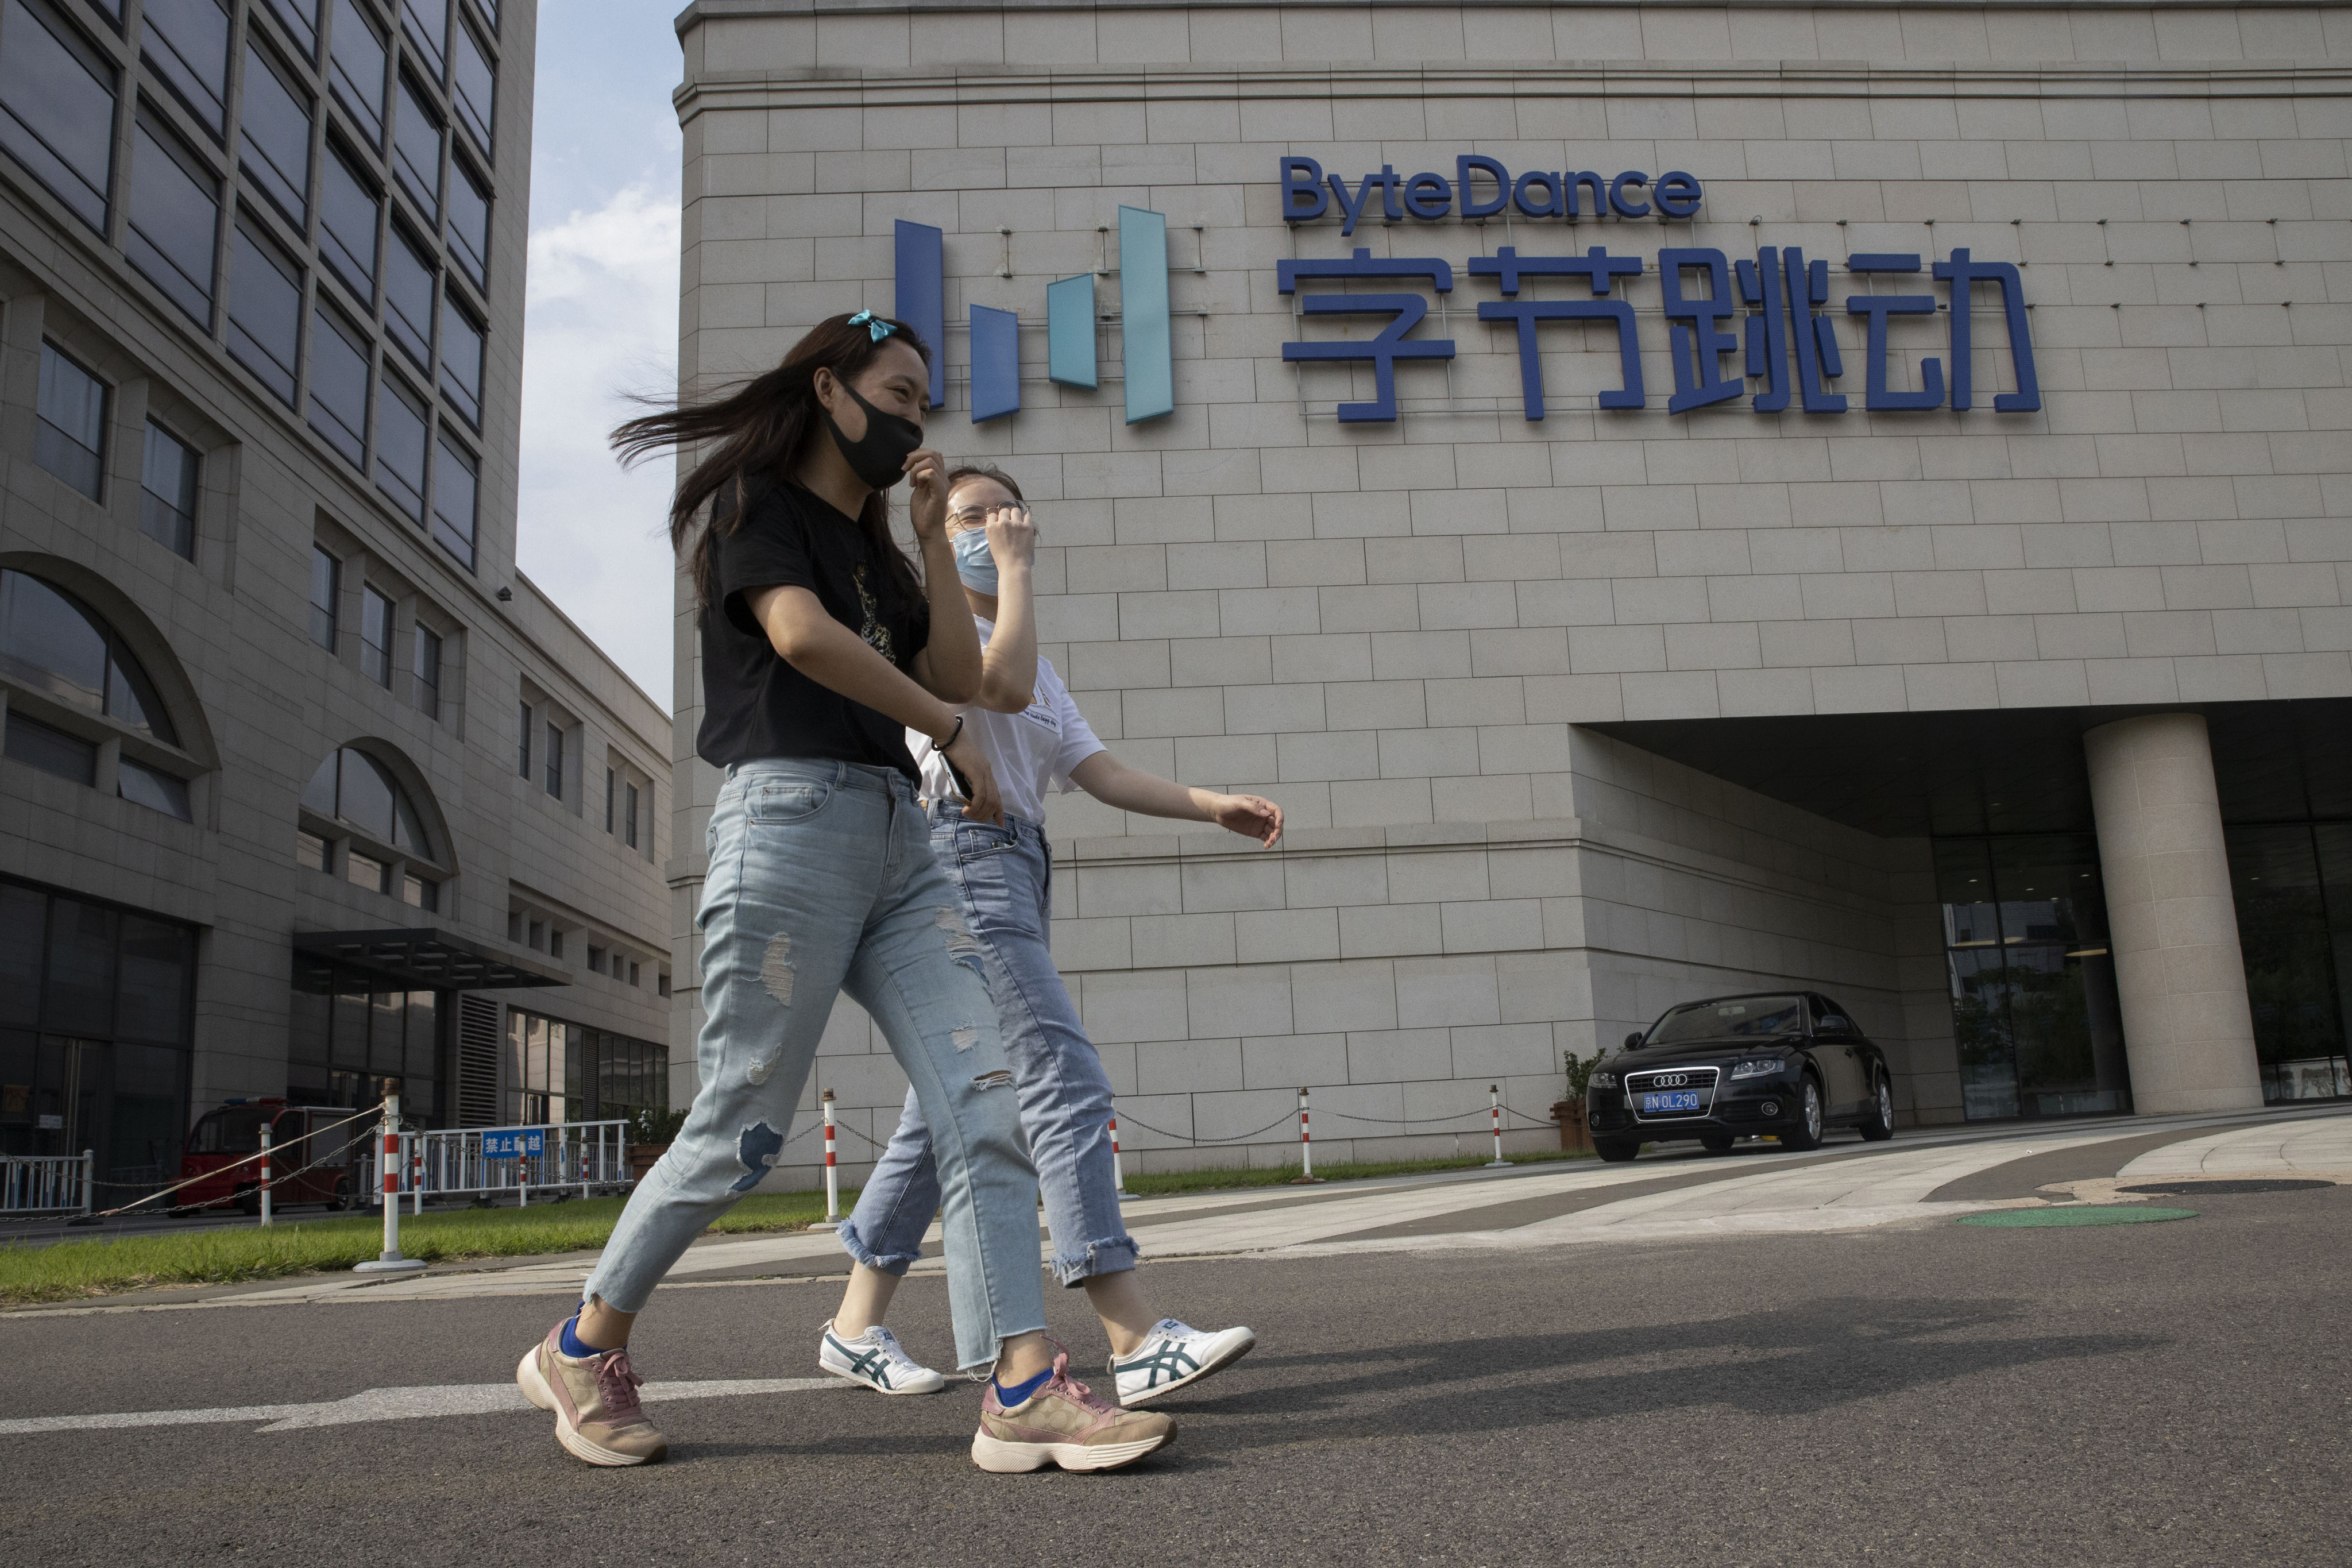 ByteDance’s headquarters in Beijing on Friday, Aug. 7, 2020. Photo: AP